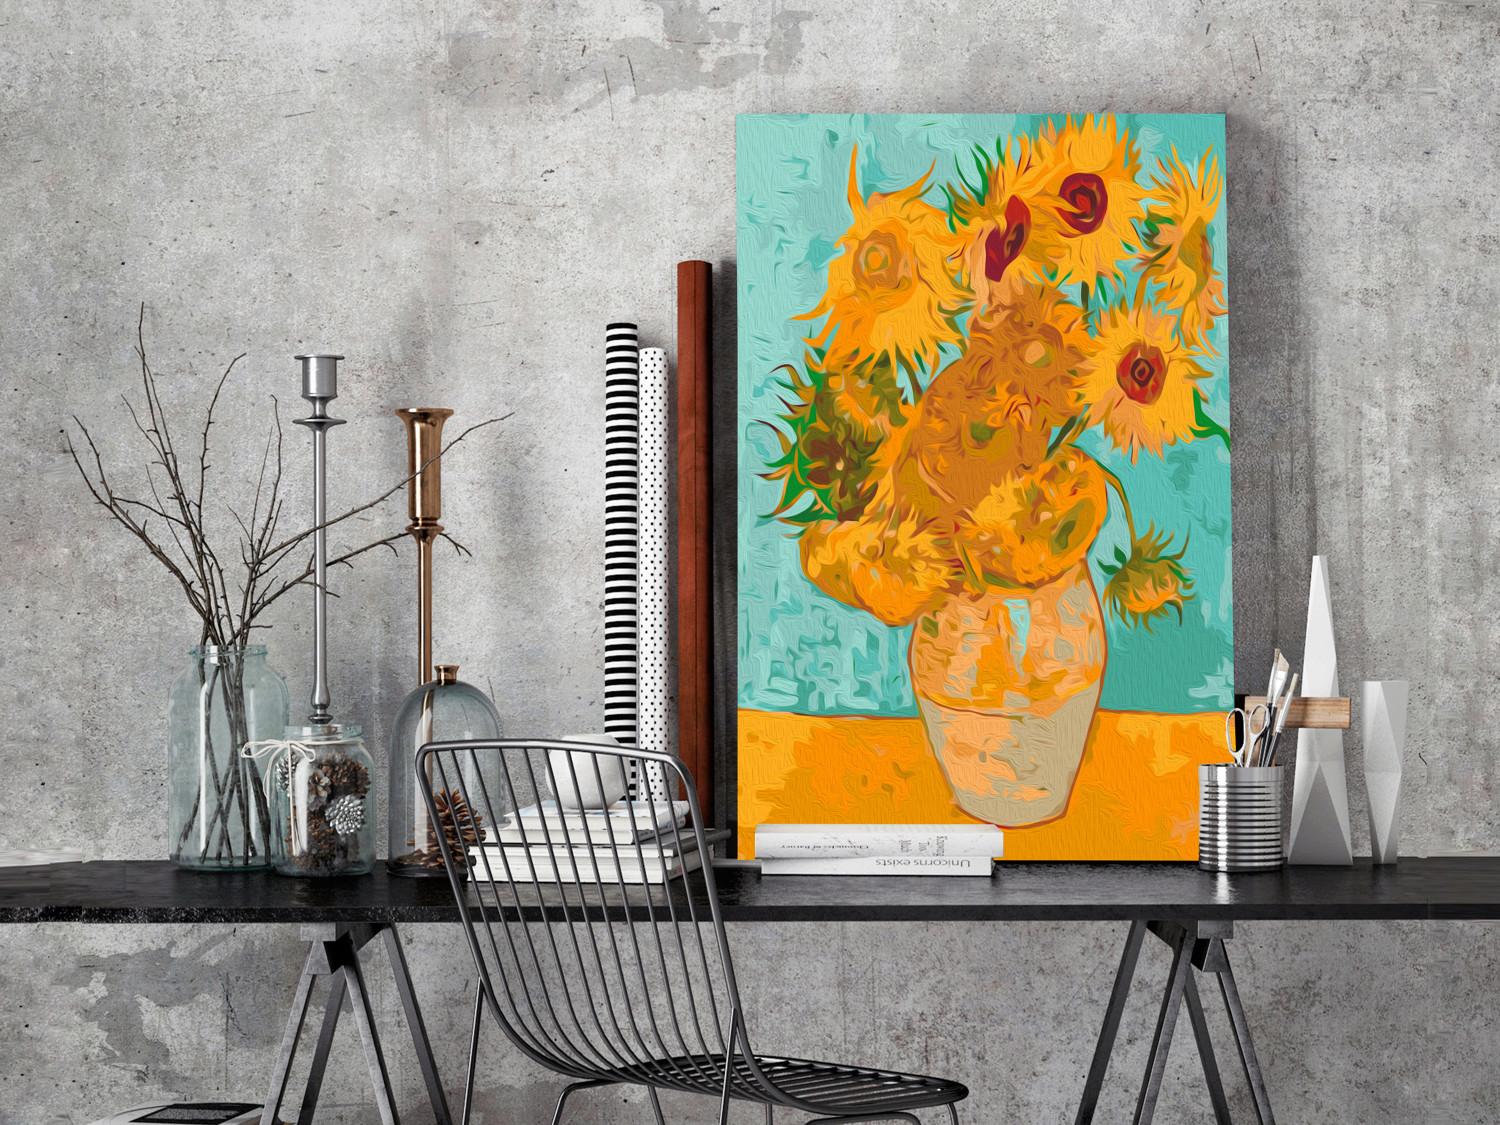 Cuadro para pintar con números Van Gogh's Sunflowers